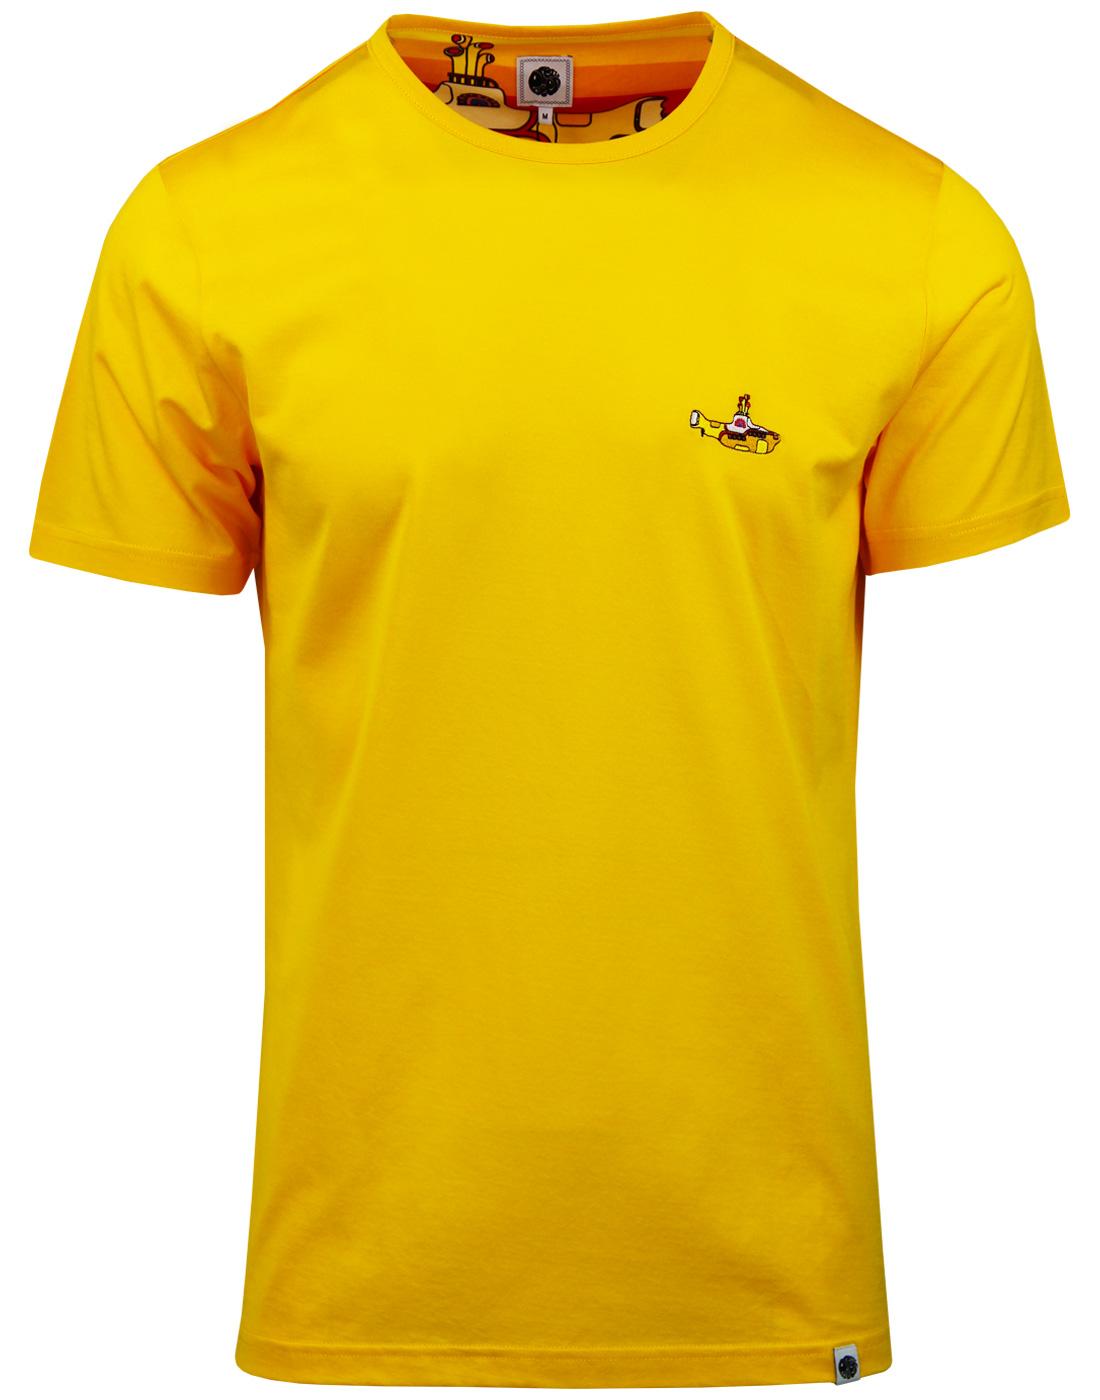 PRETTY GREEN x THE BEATLES Submarine T-shirt in Yellow